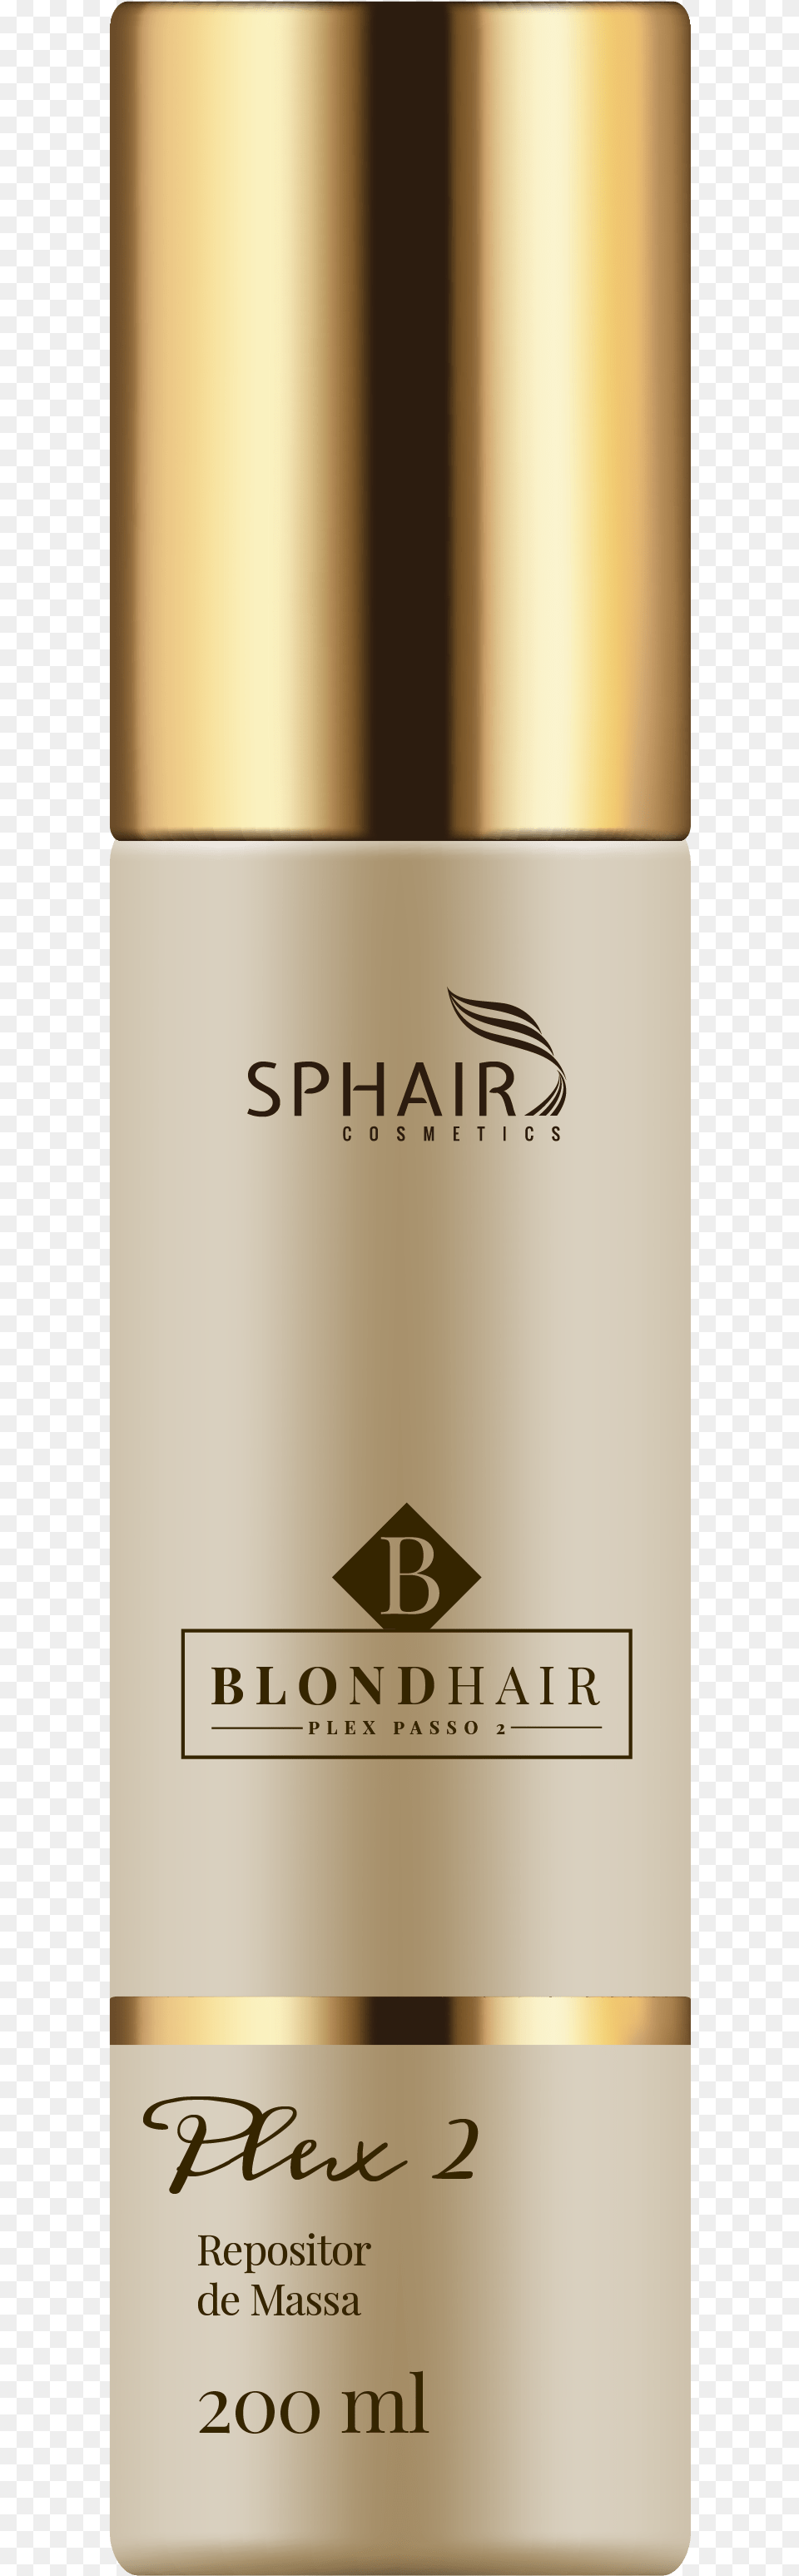 Blondhair Plex2 13 May 2018 Cosmetics, Bottle Png